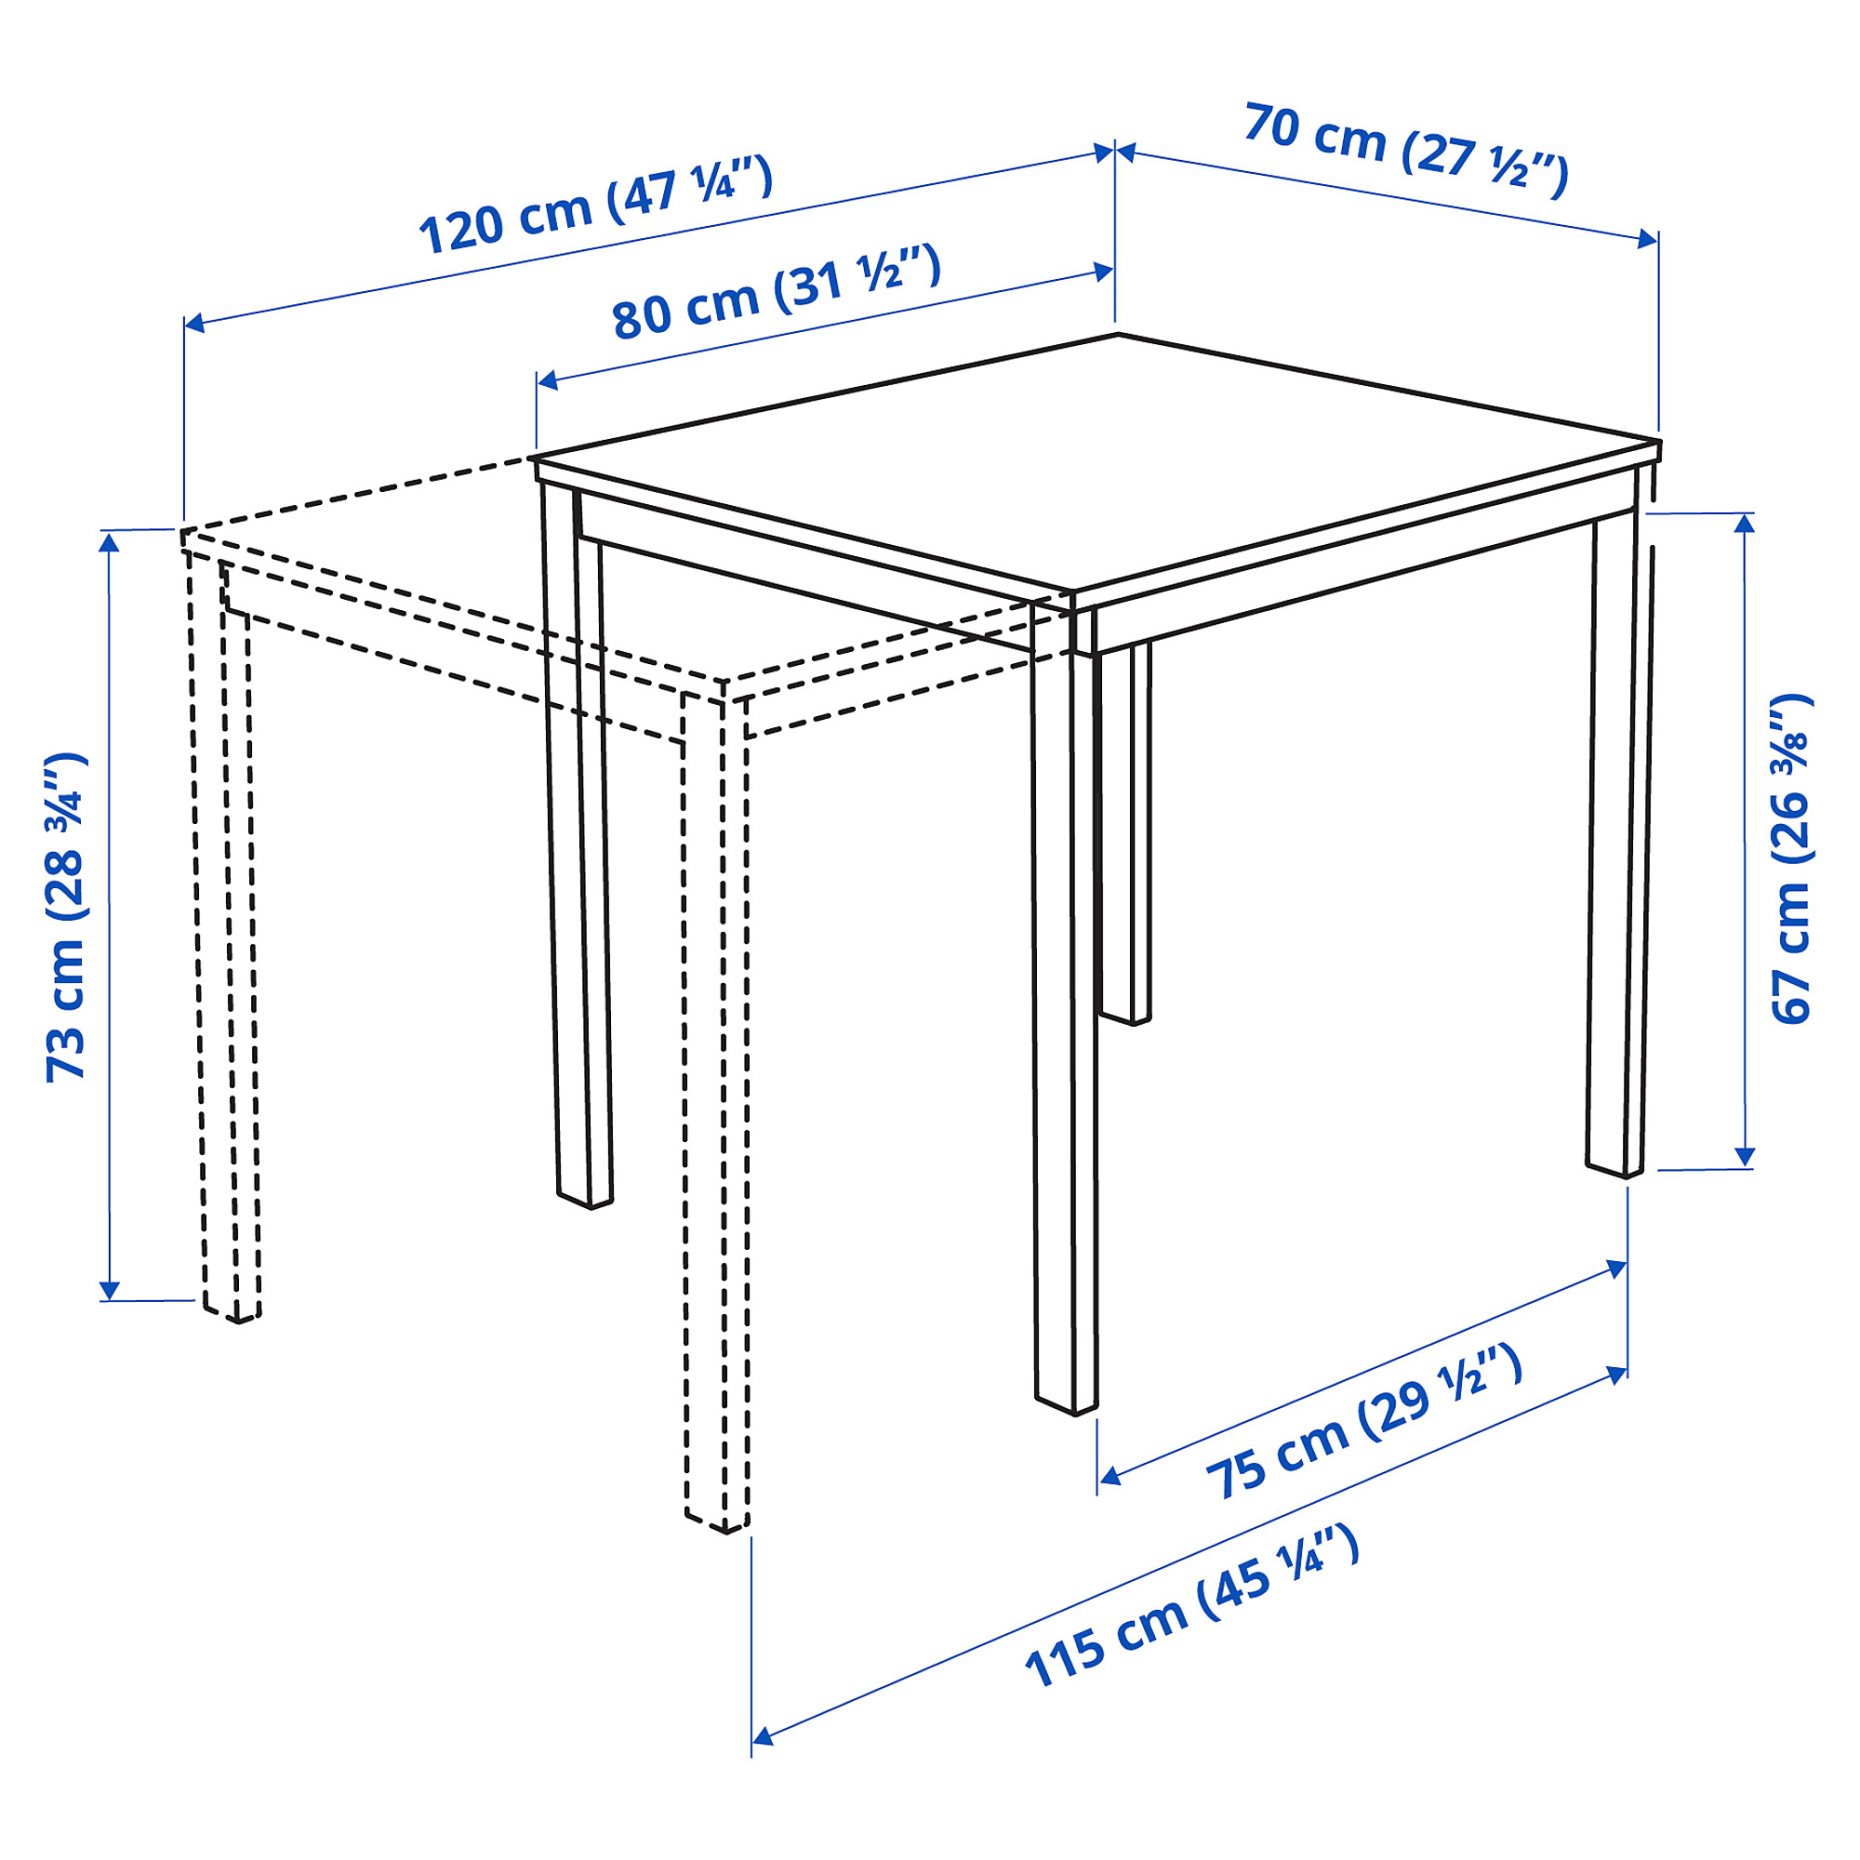 VANGSTA/TEODORES, τραπέζι και 2 καρέκλες, 192.212.09